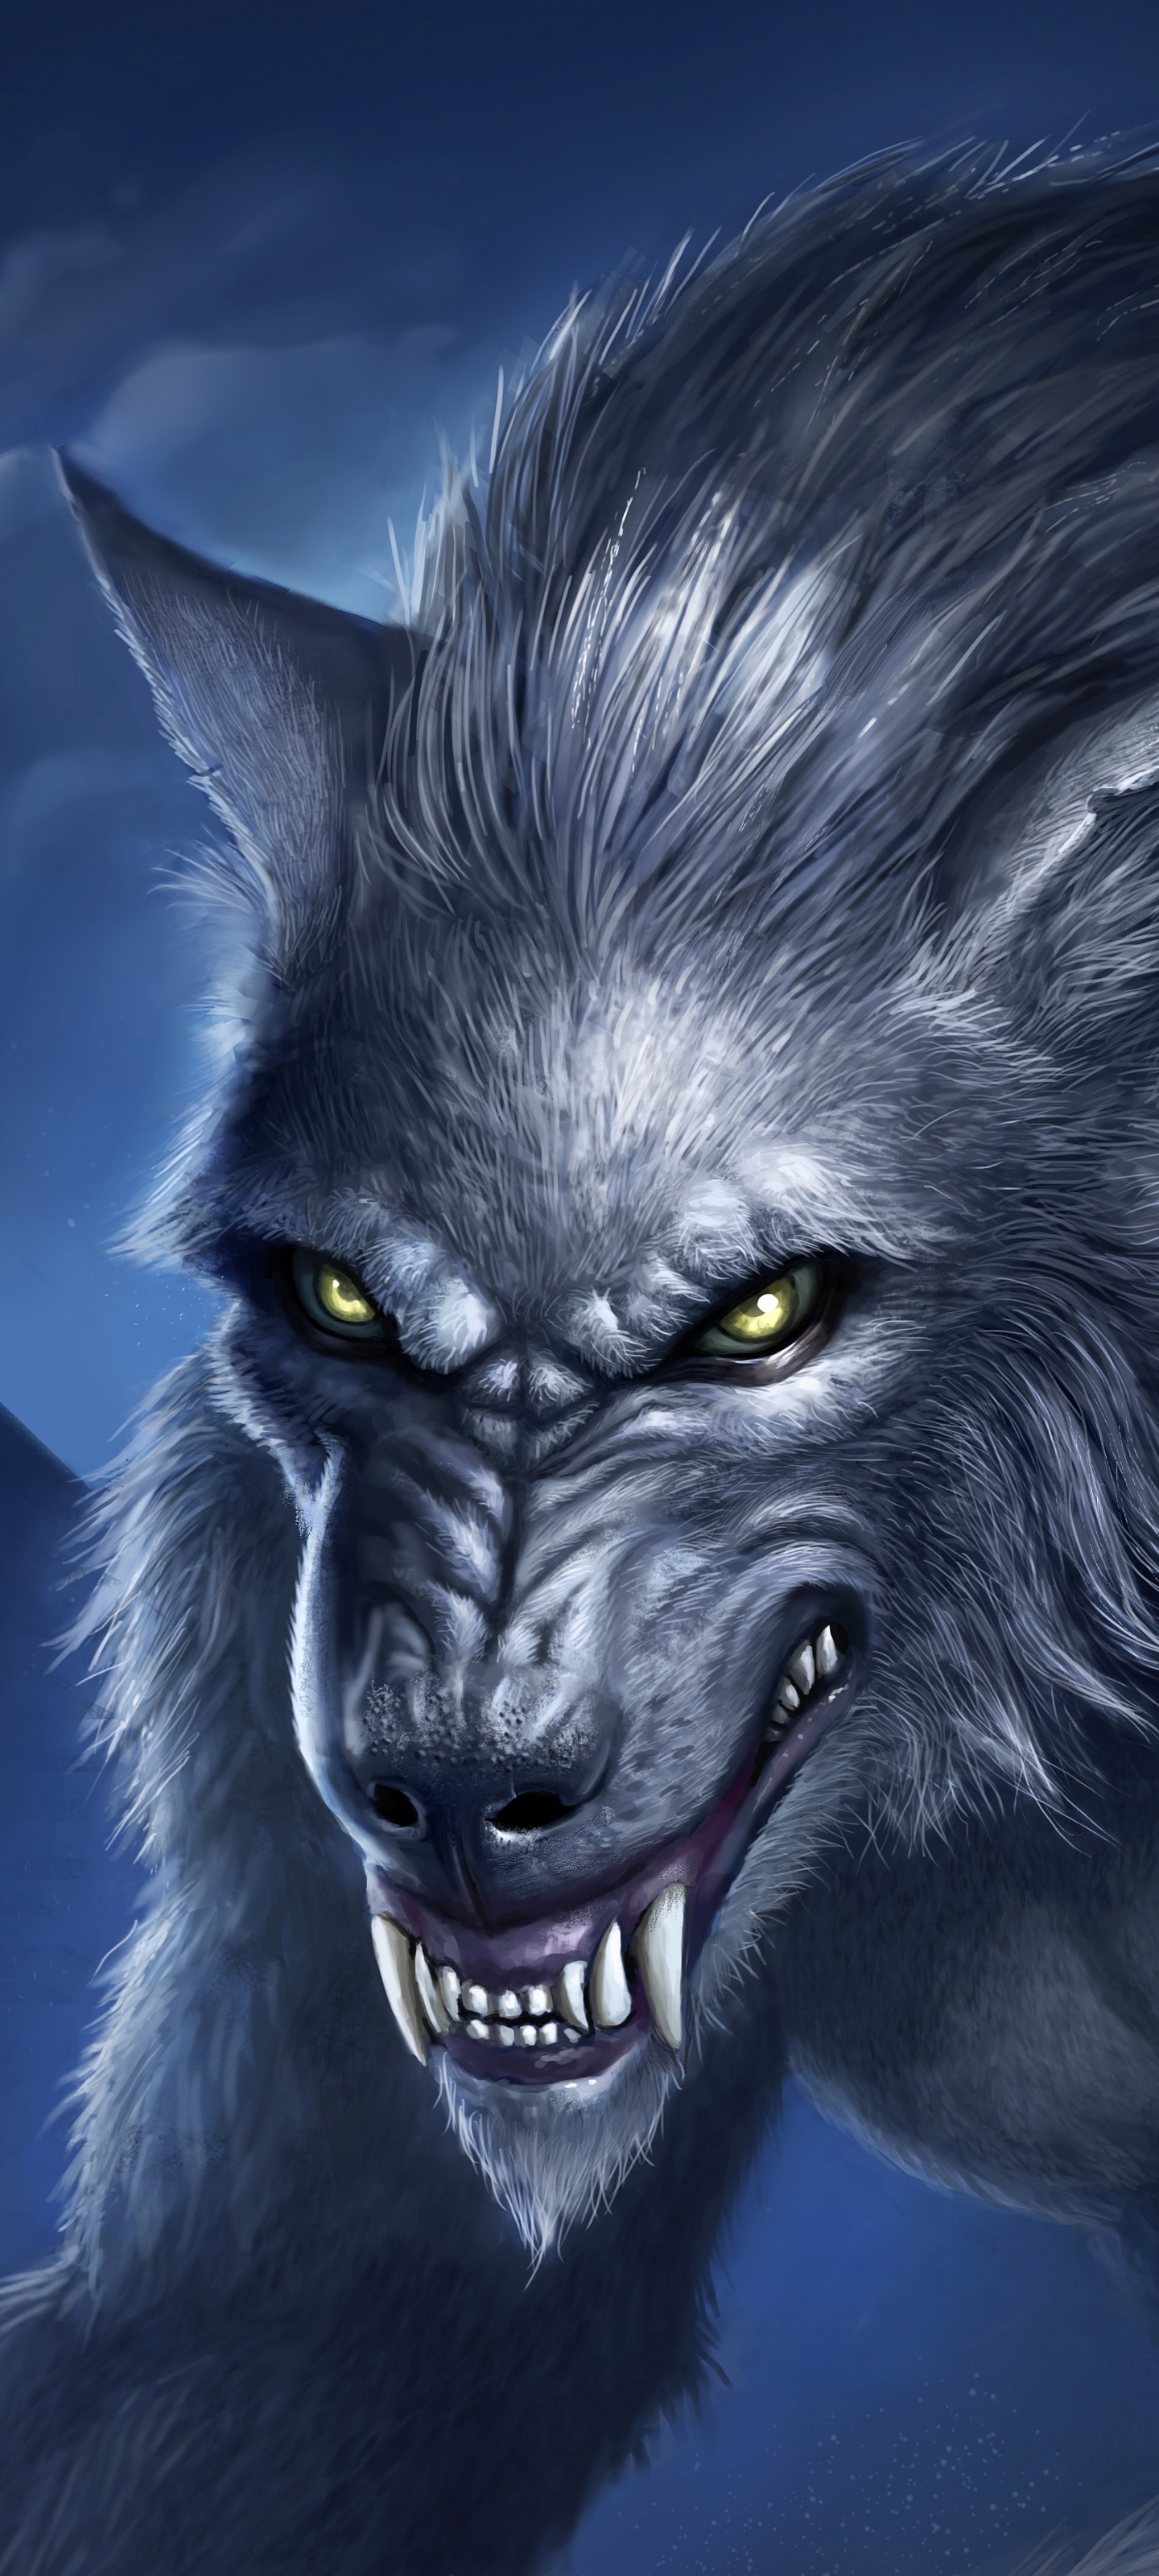 Wallpaper ID 298290  Dark Werewolf Phone Wallpaper Creature 1644x3840  free download